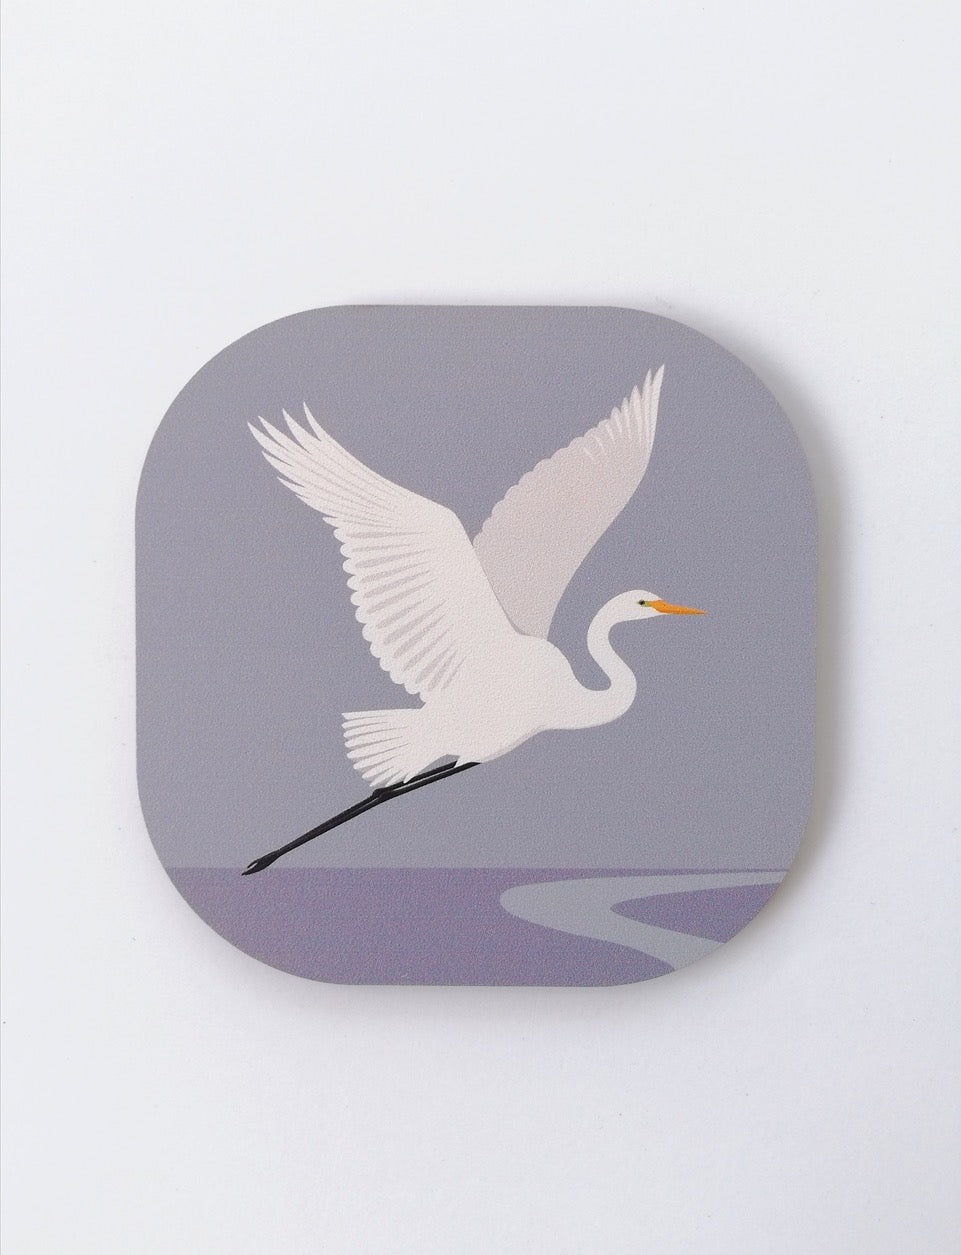 White Heron Kotuku flying, wooden coaster by Hansby Design, New Zealand